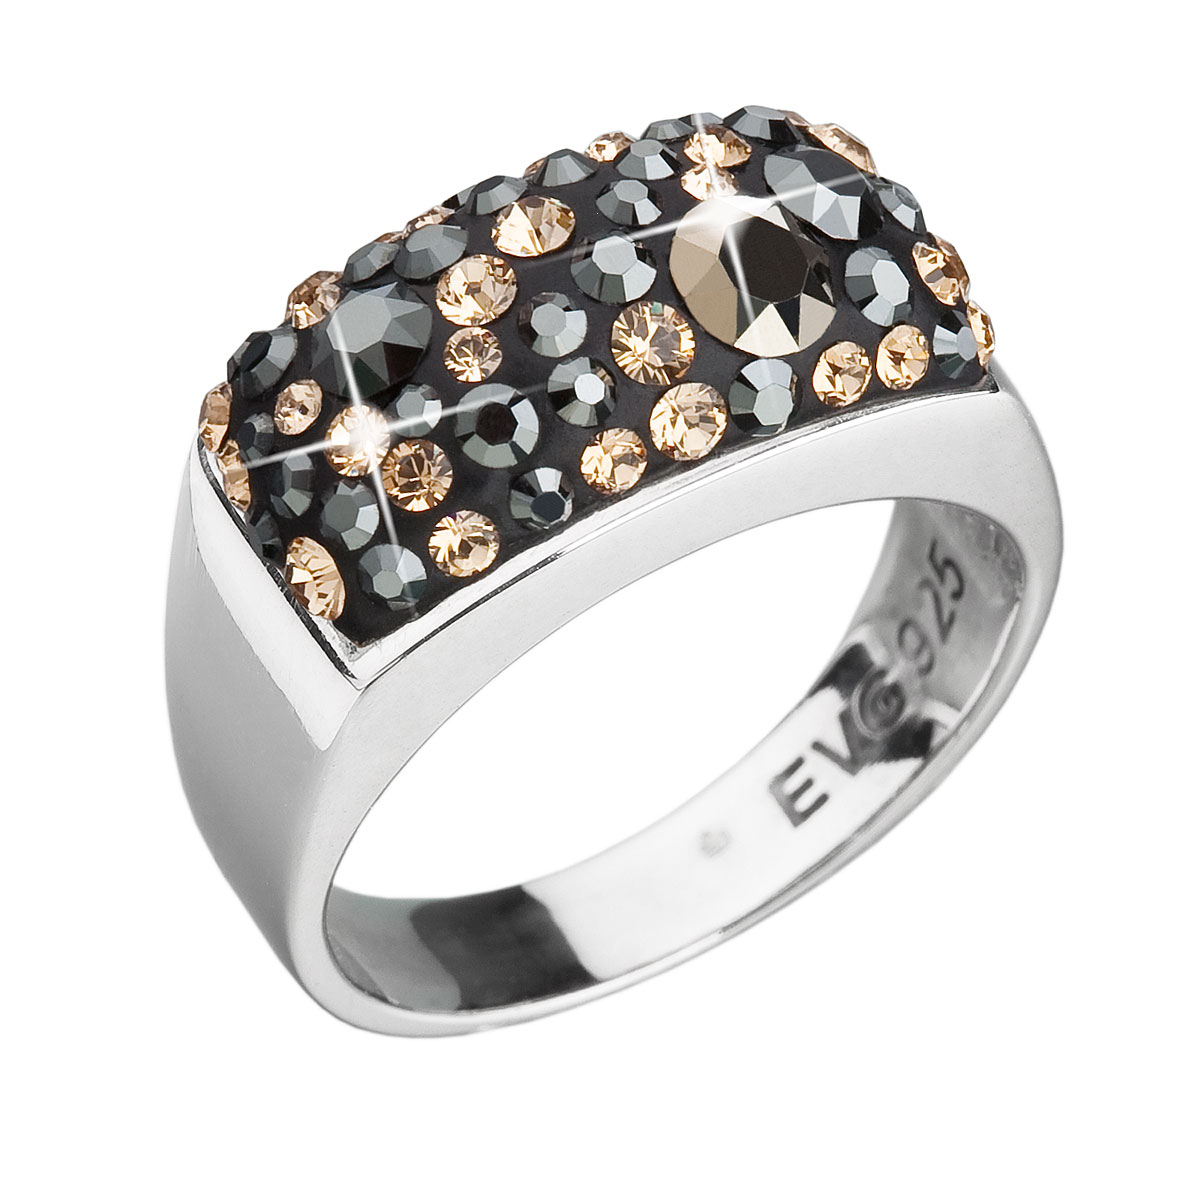 Evolution Group Stříbrný prsten s krystaly mix barev zlatý 35014.4 colorado